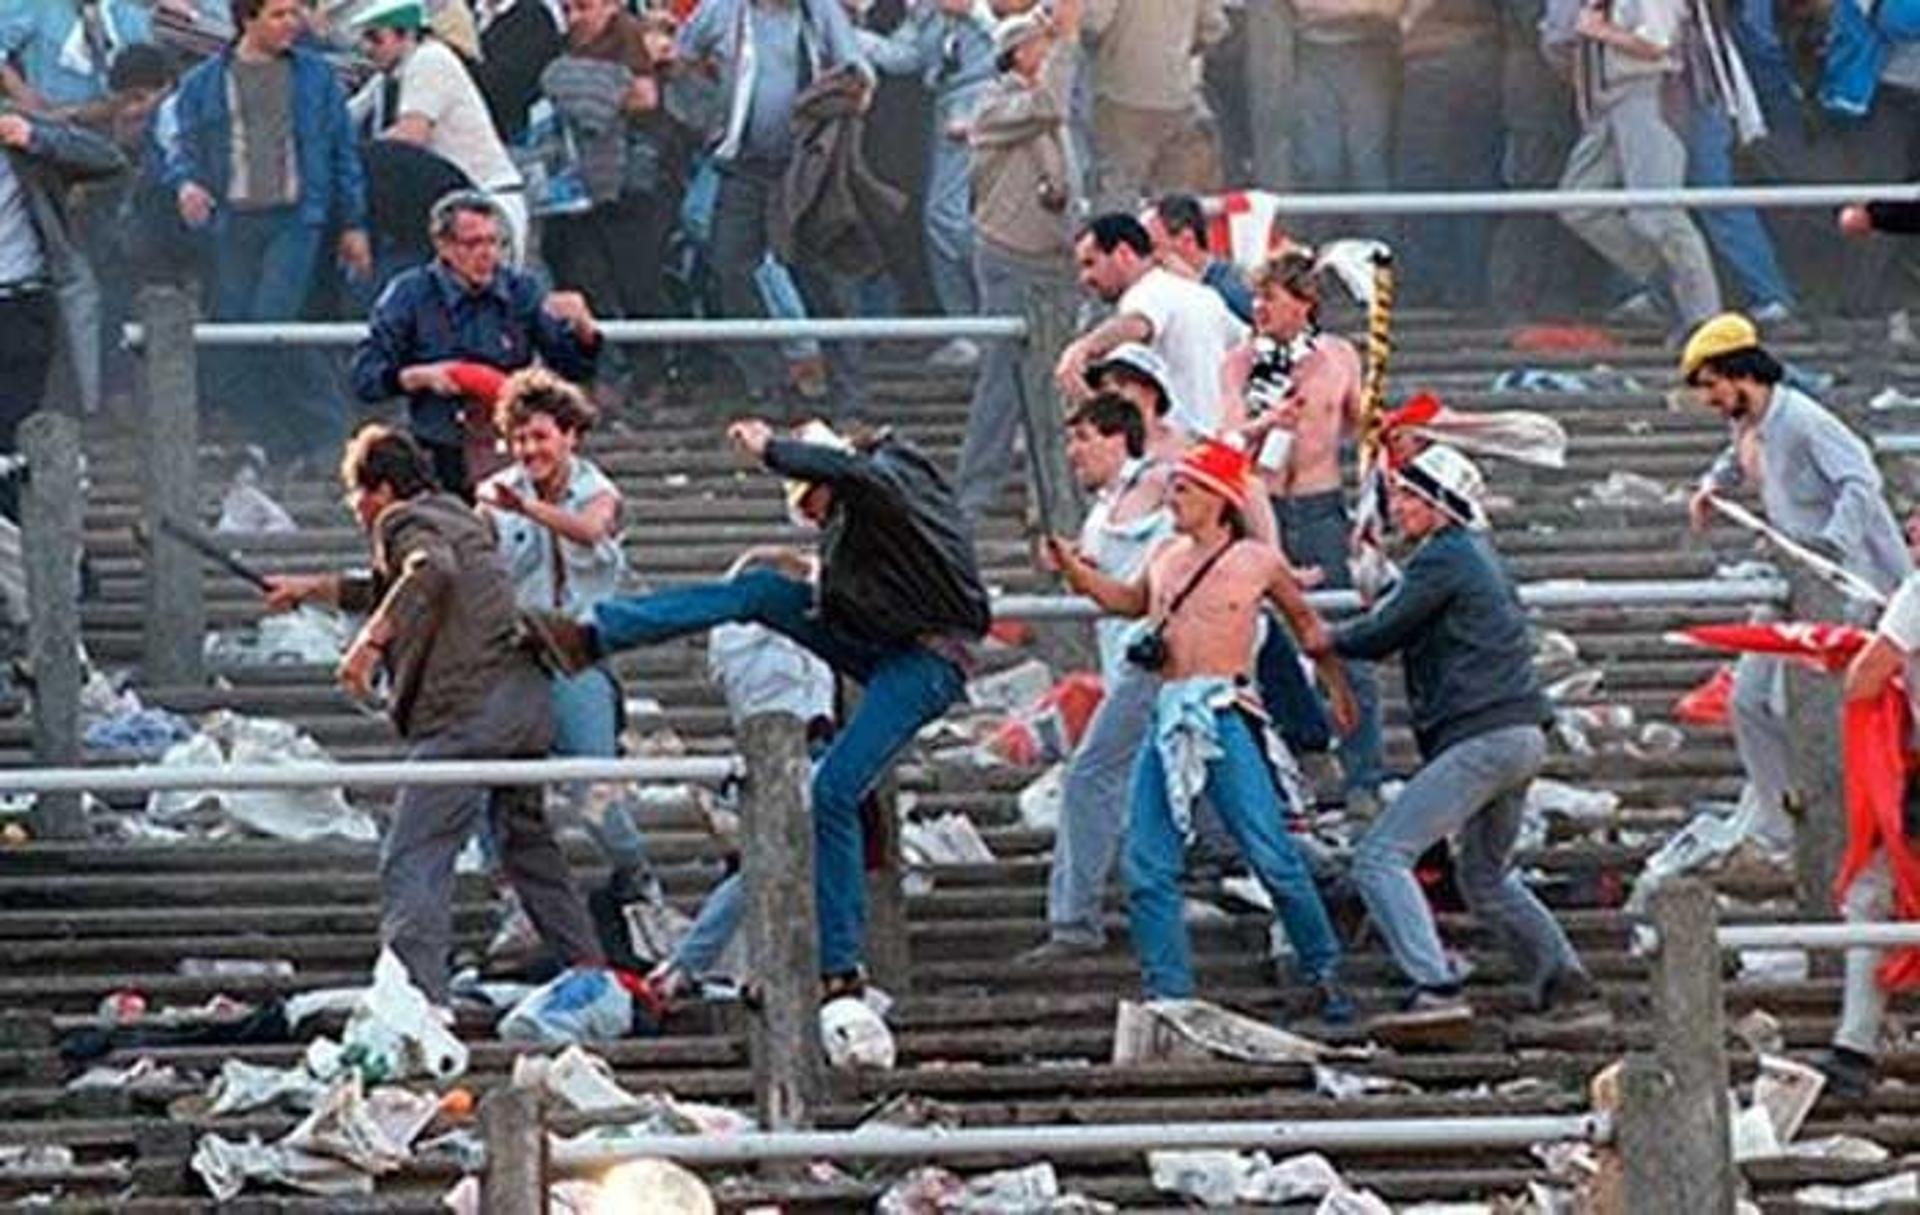 Tragédia de Heysel, na Bélgica - Juventus x Liverpool - 1985